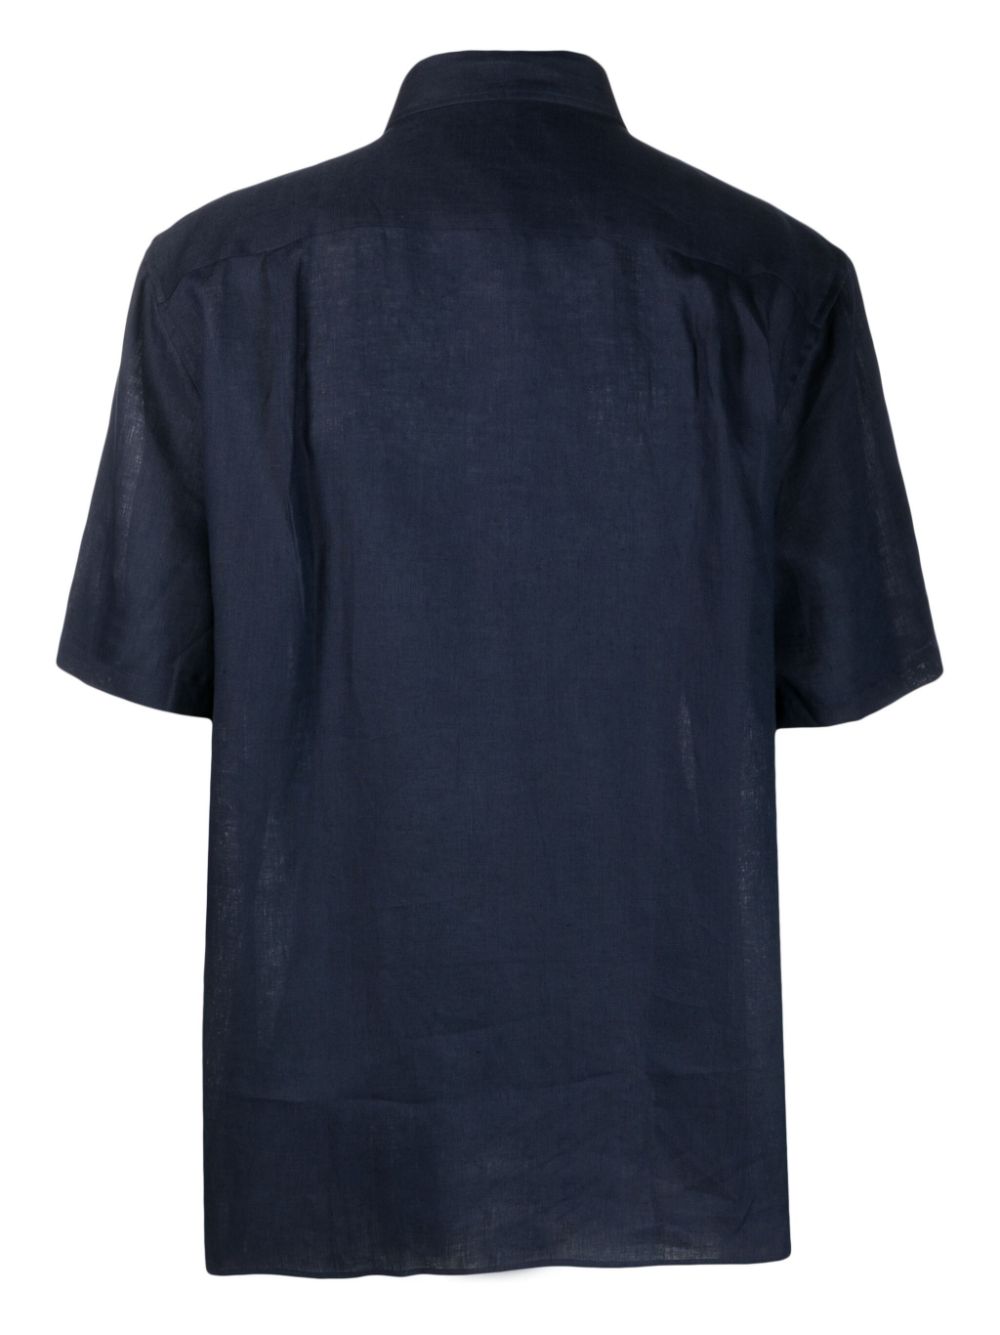 Embroidered logo short-sleeve shirt<BR/><BR/>